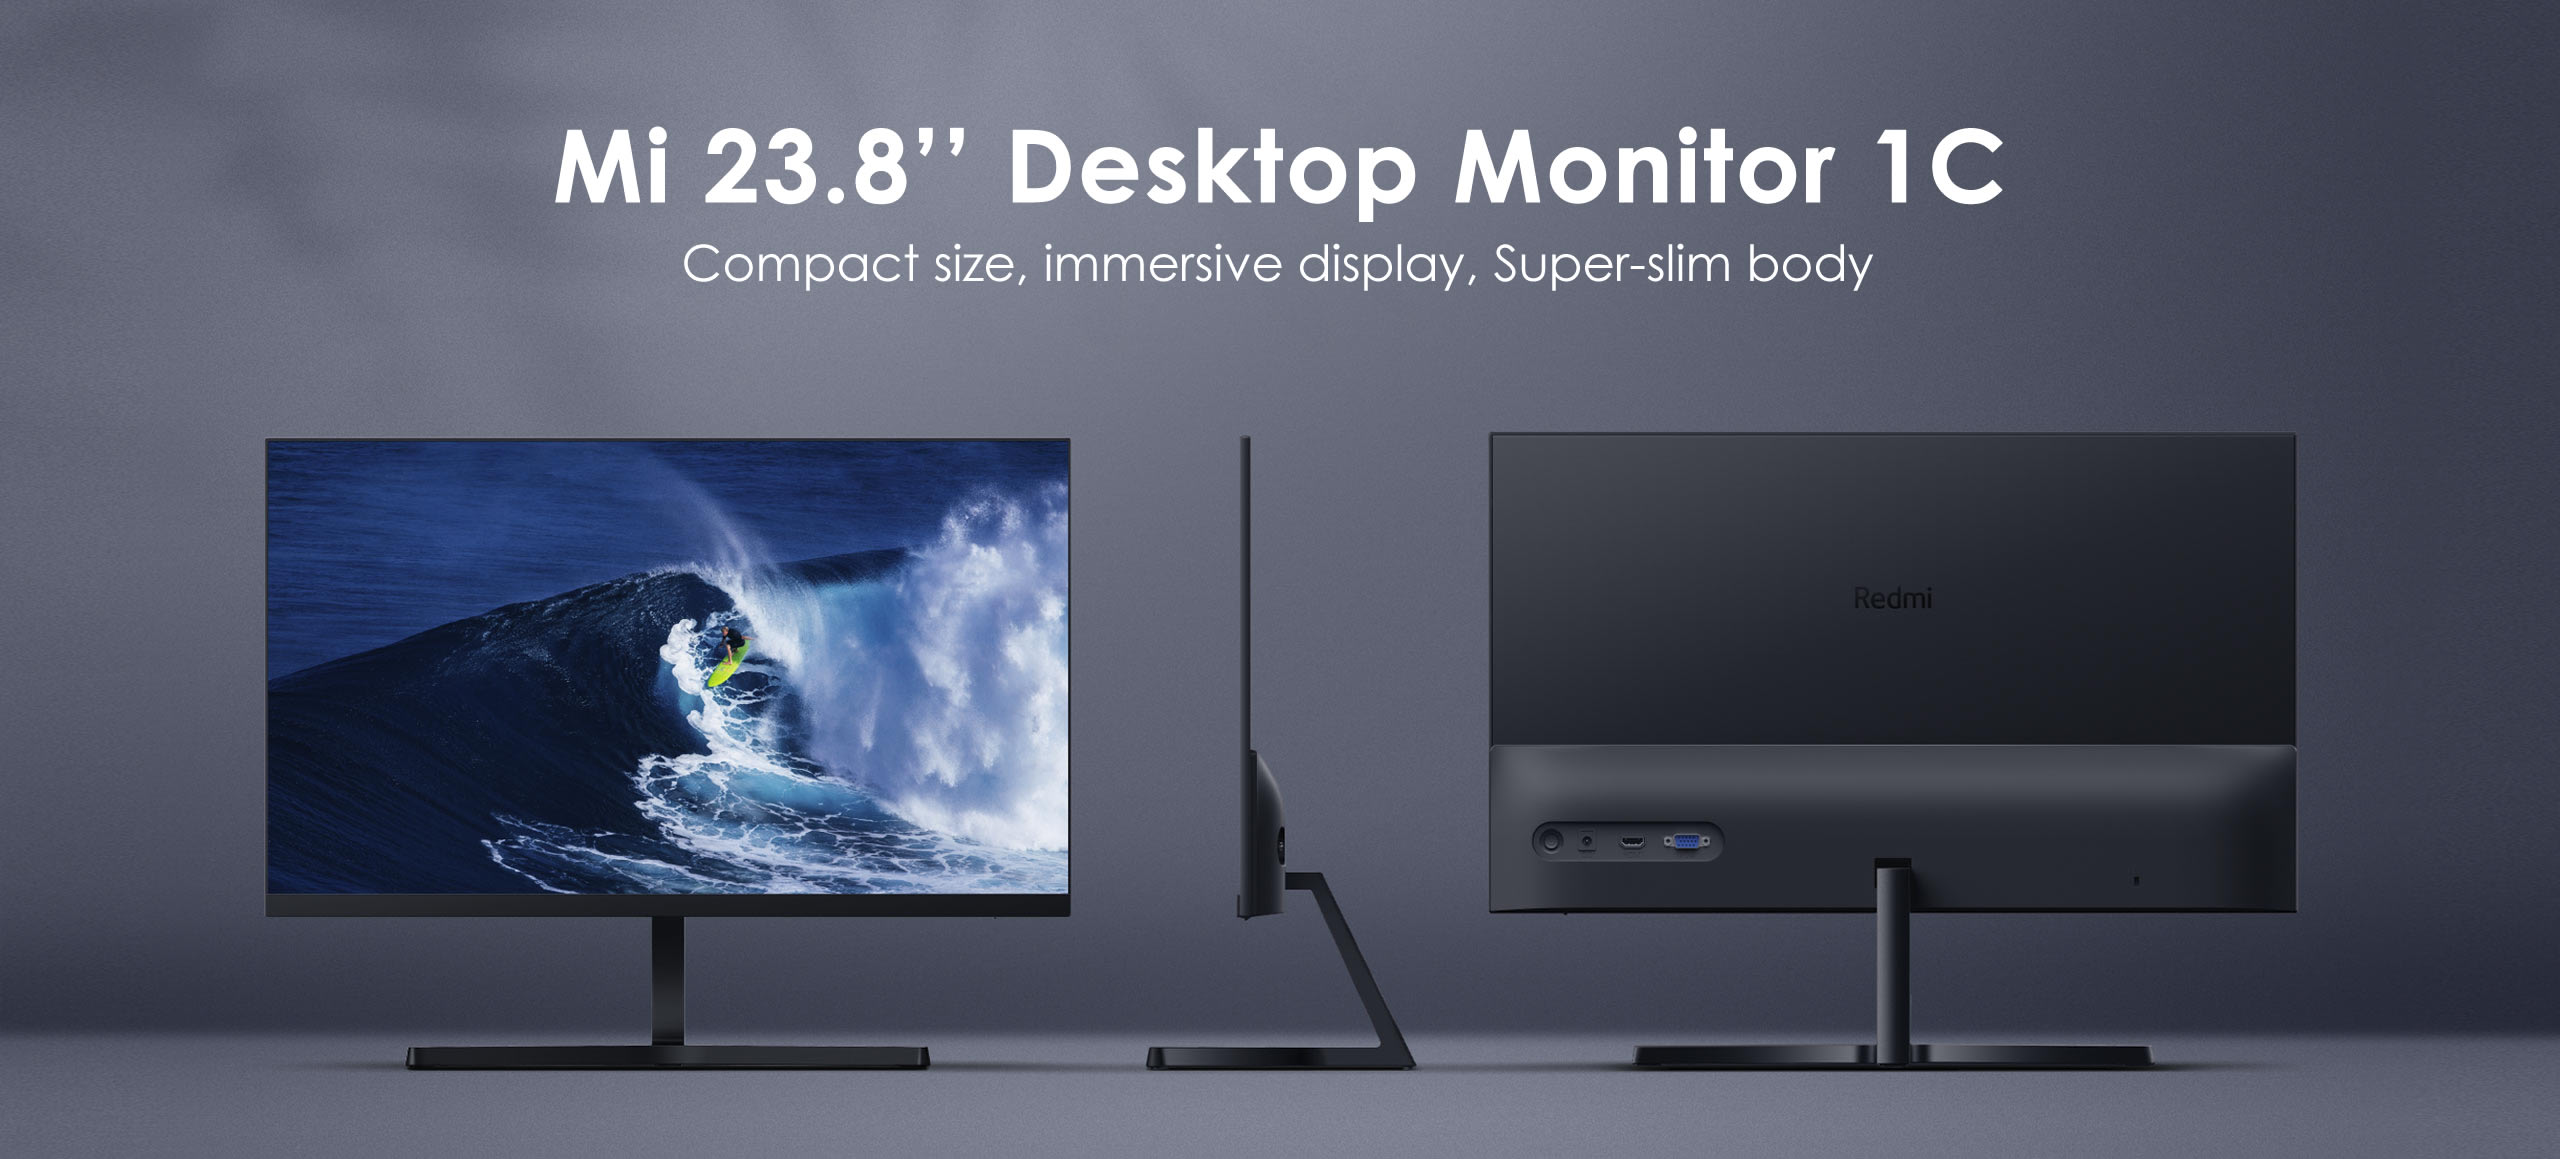 Mi Desktop Monitor 23.8 inch